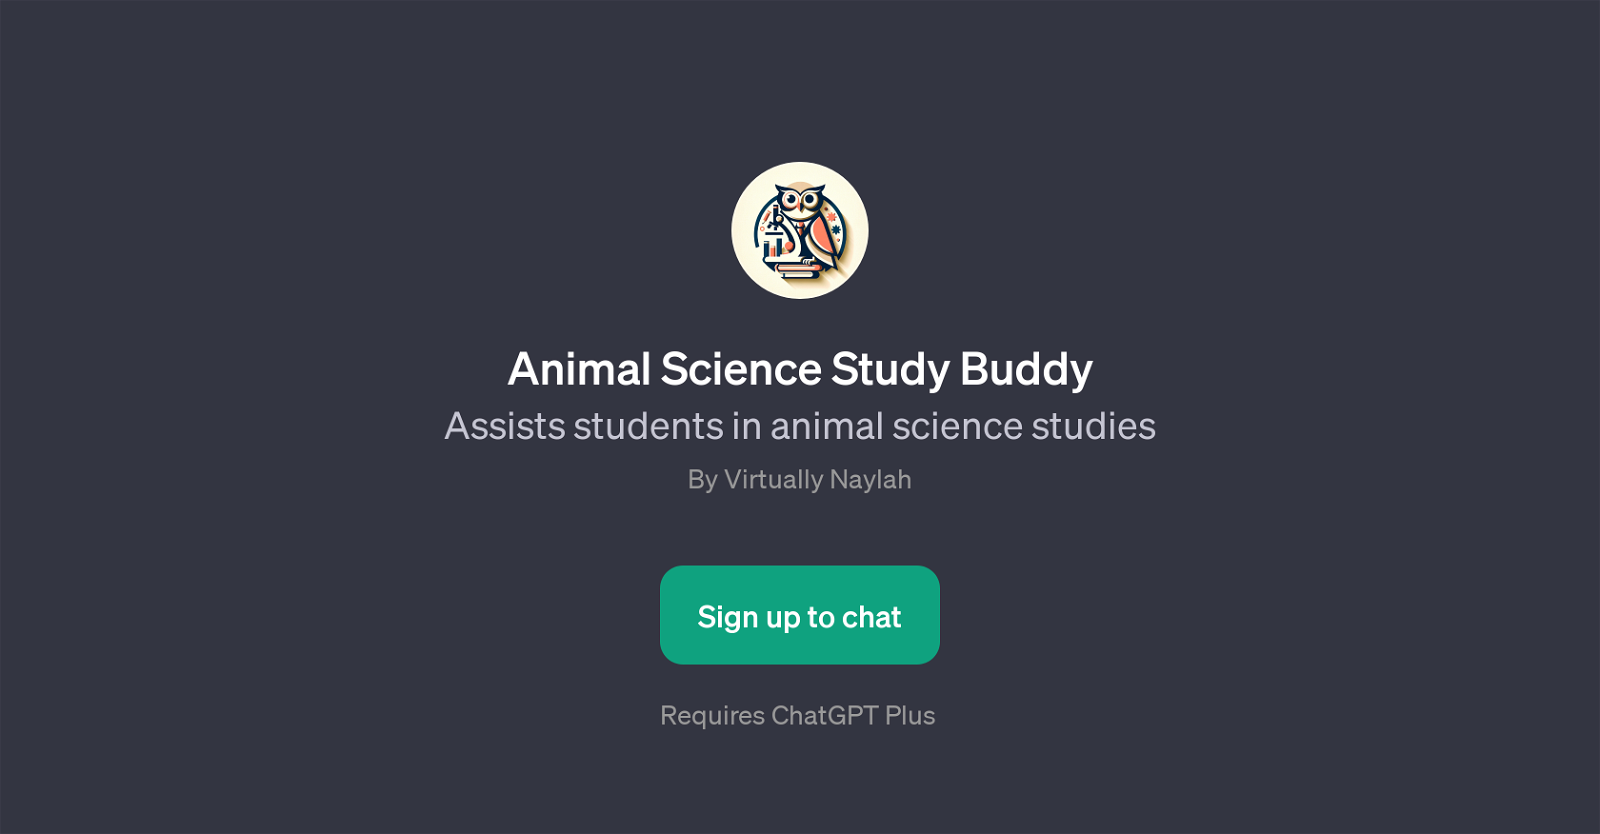 Animal Science Study Buddy website